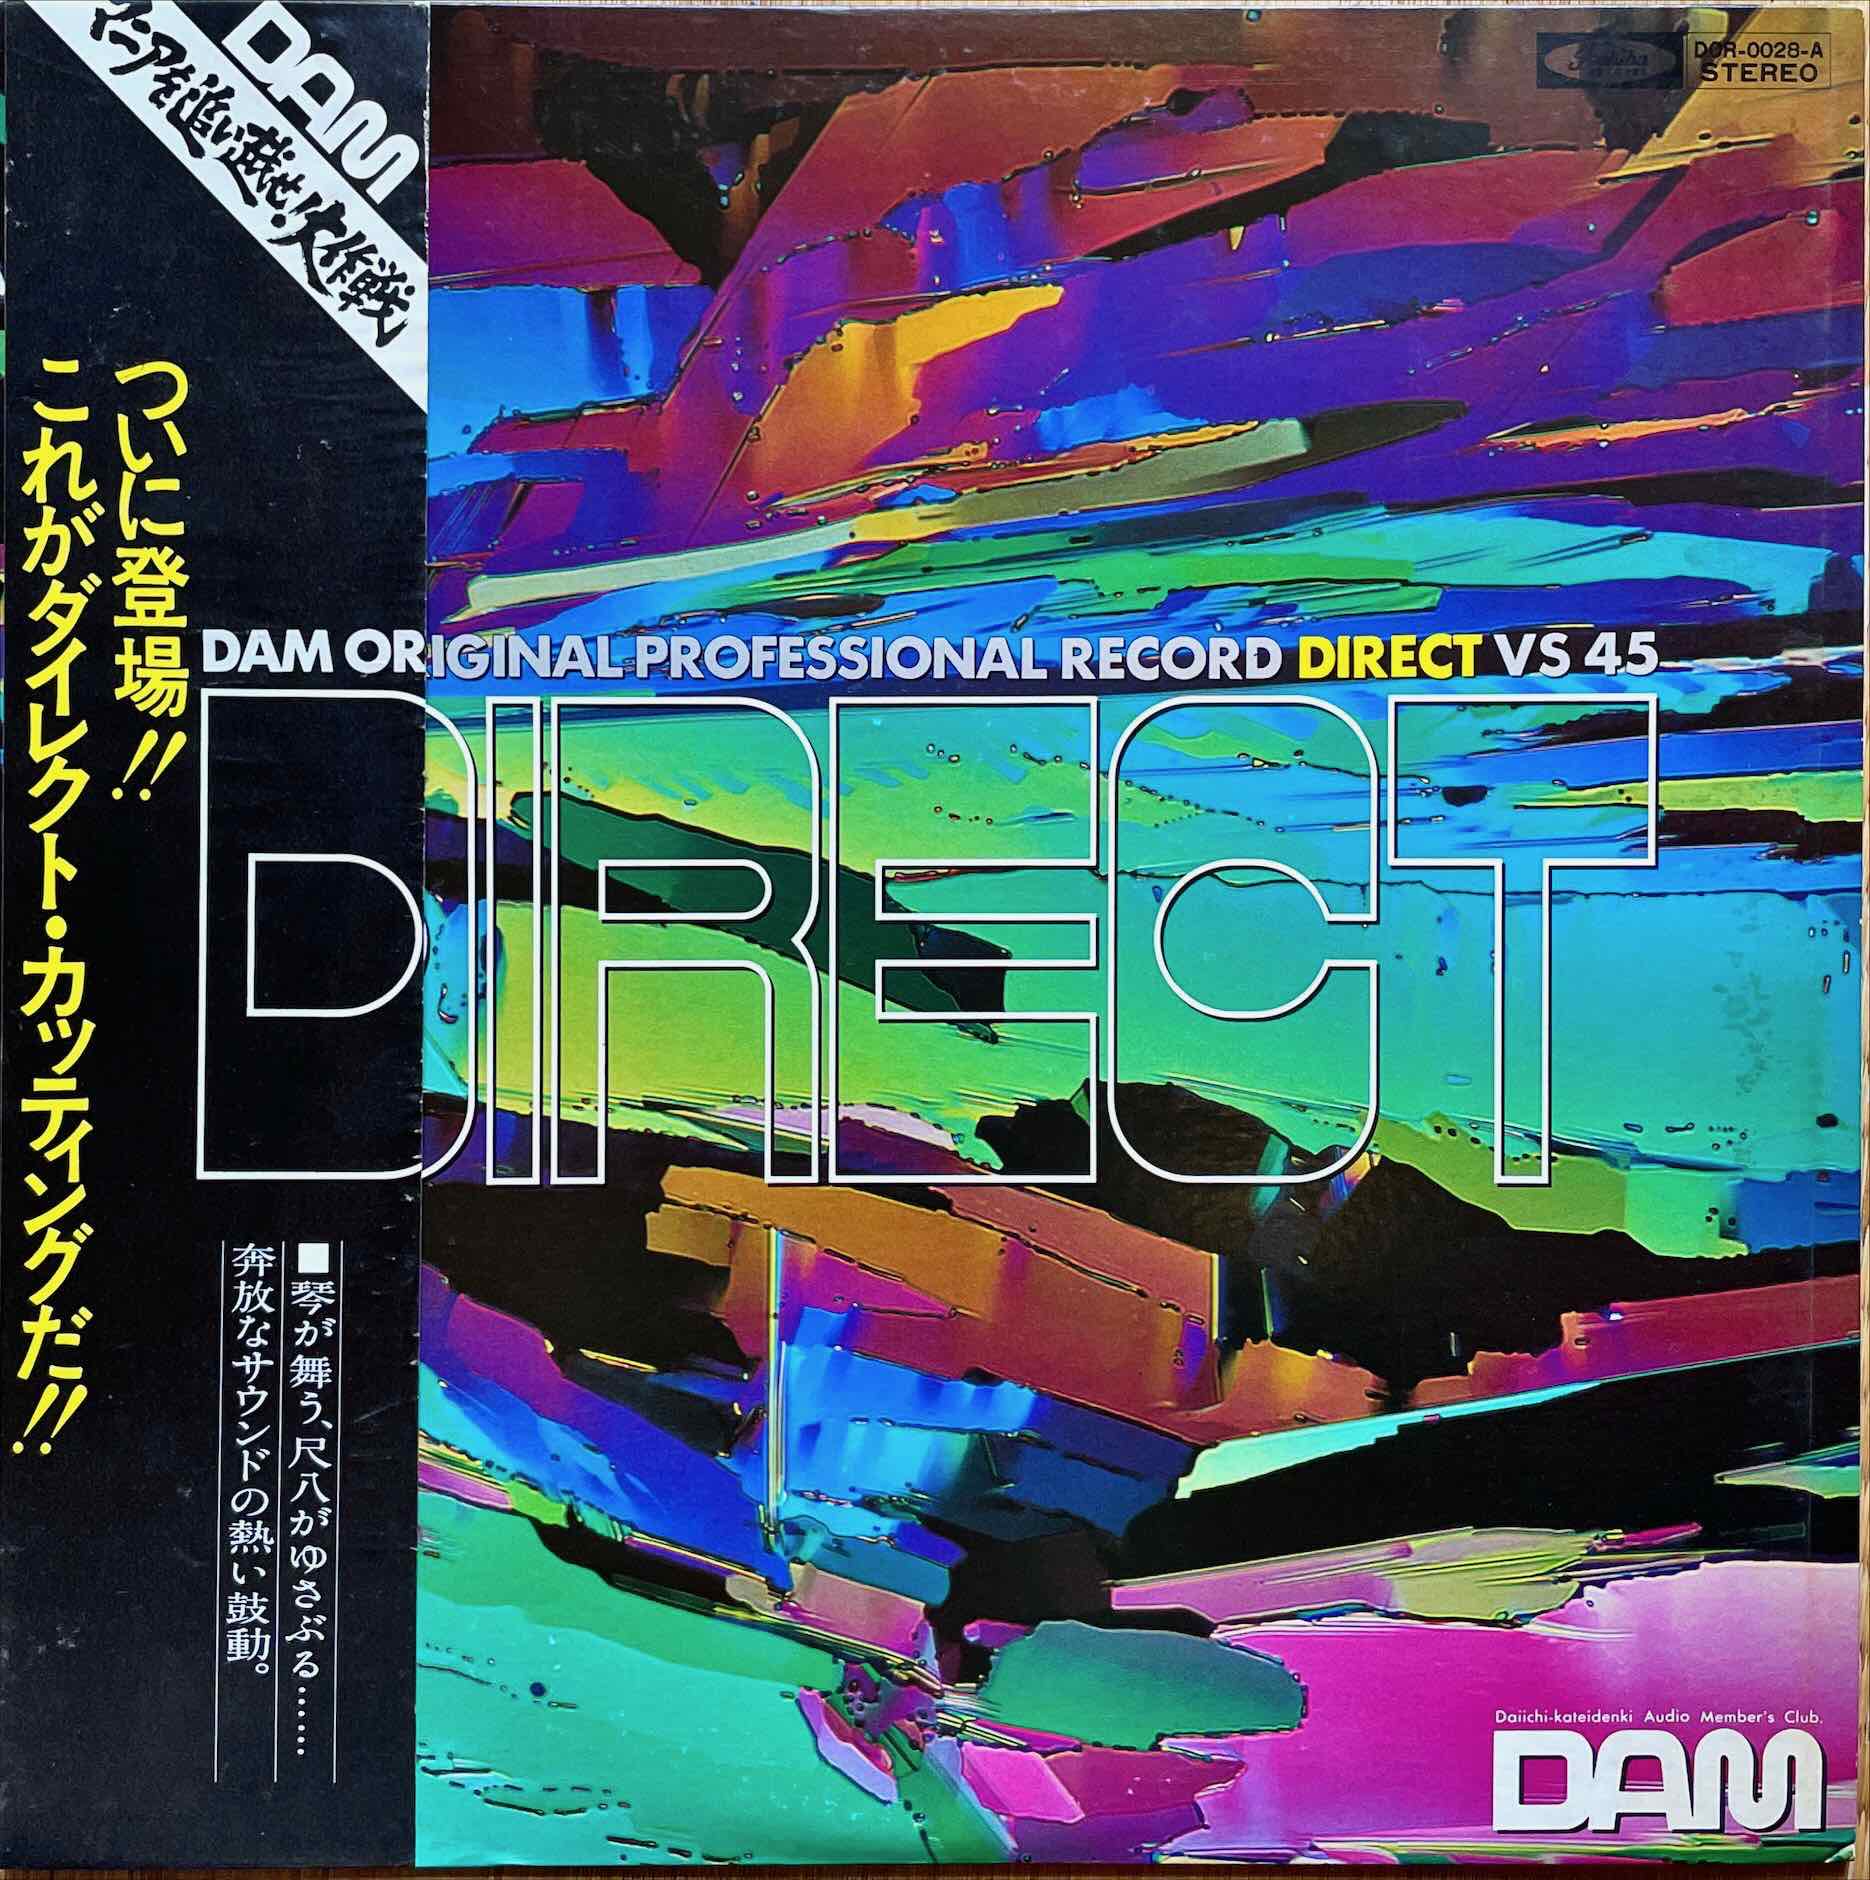  DAM Original Professional Record Direct Vs 45 LP Sleeve front